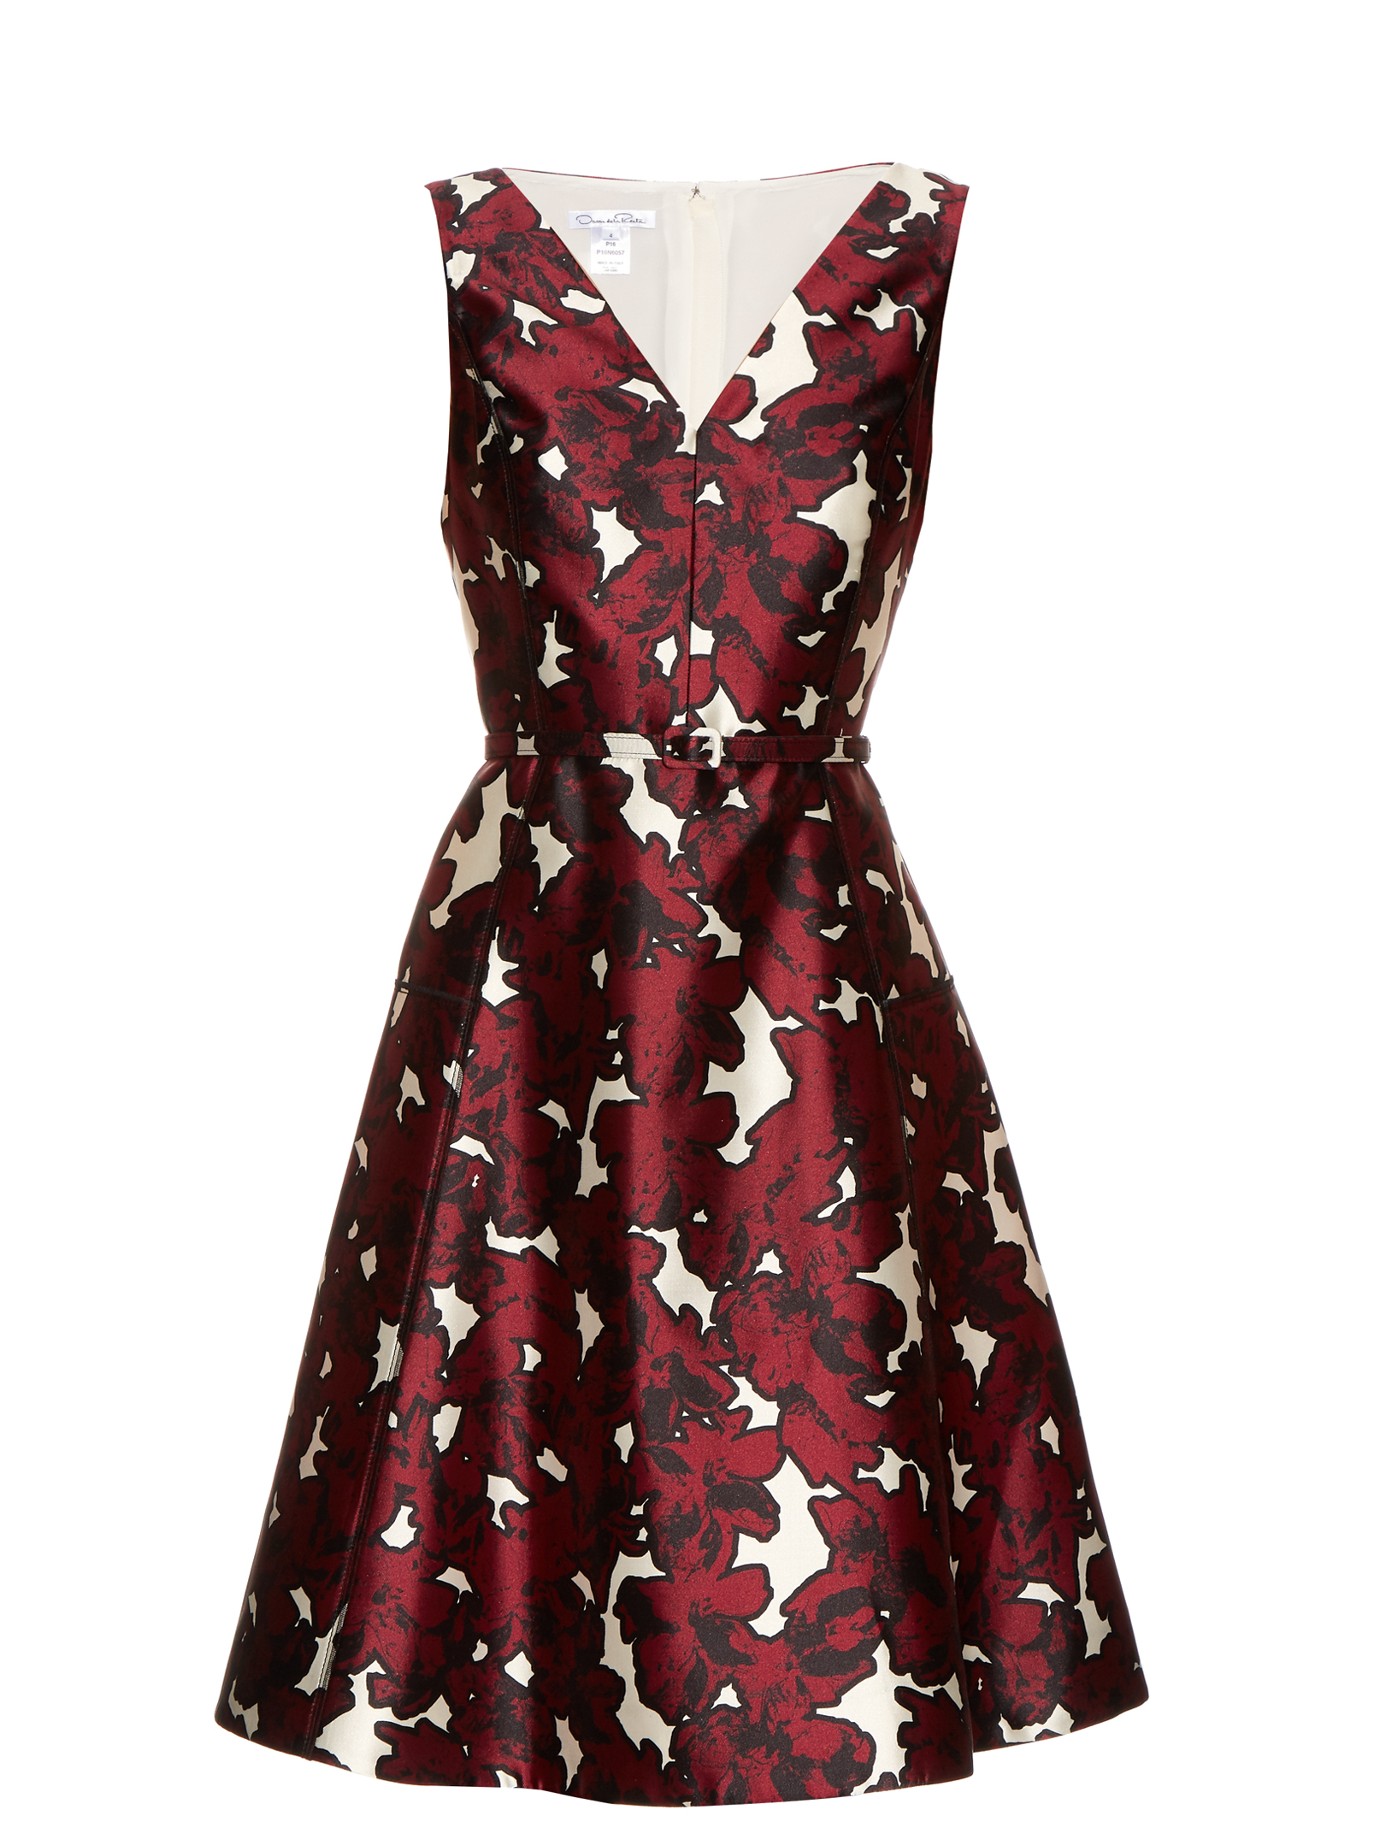 Oscar De La Renta - Floral-Print Silk-Twill Dress | FASHION STYLE FAN